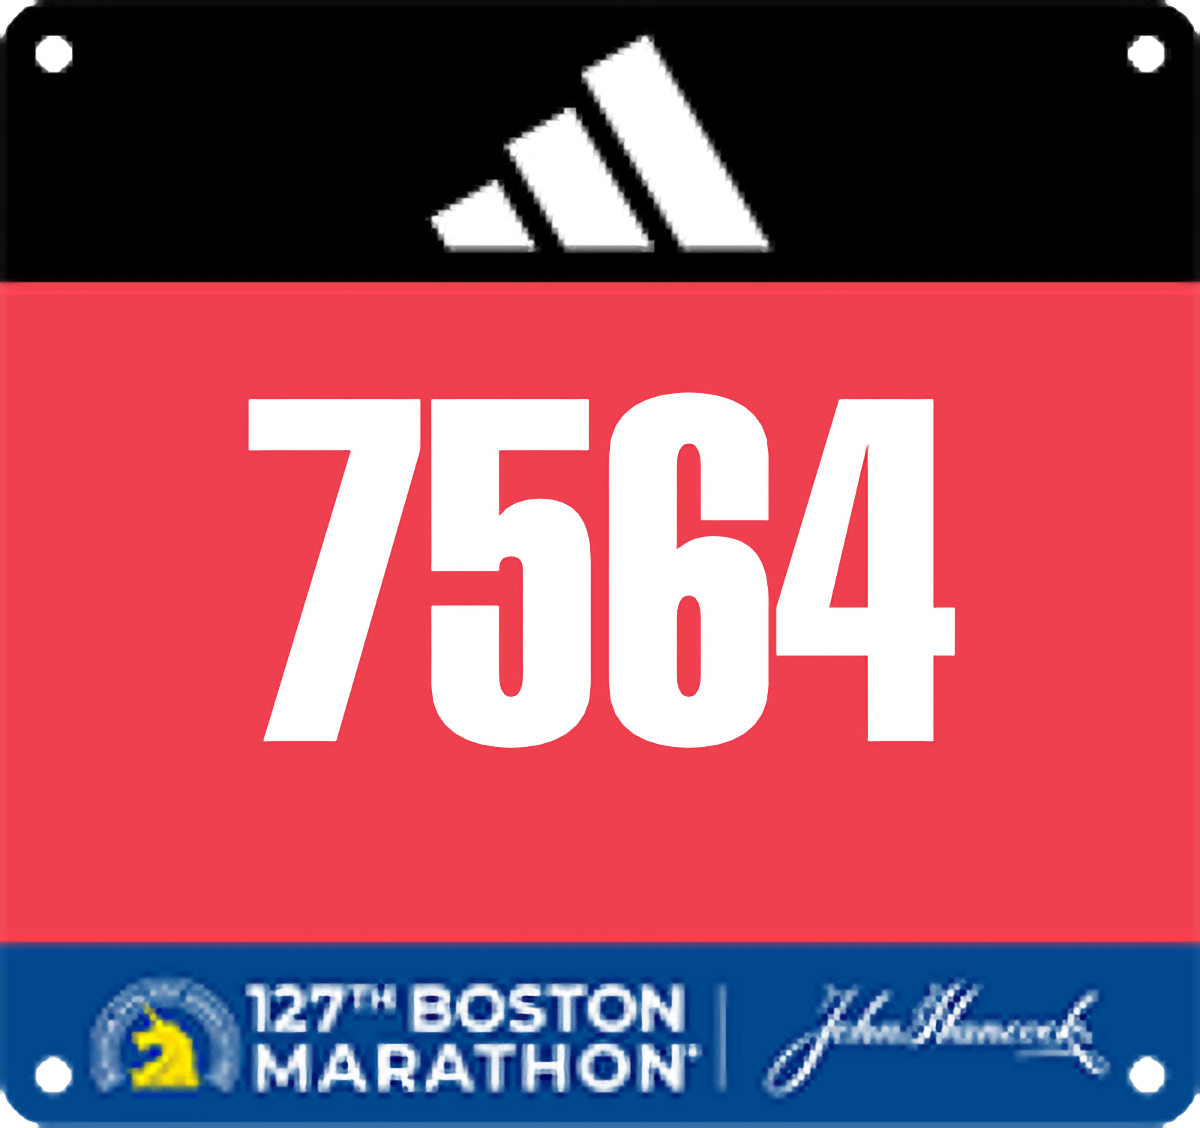 127th Boston Marathon red bib number 7564